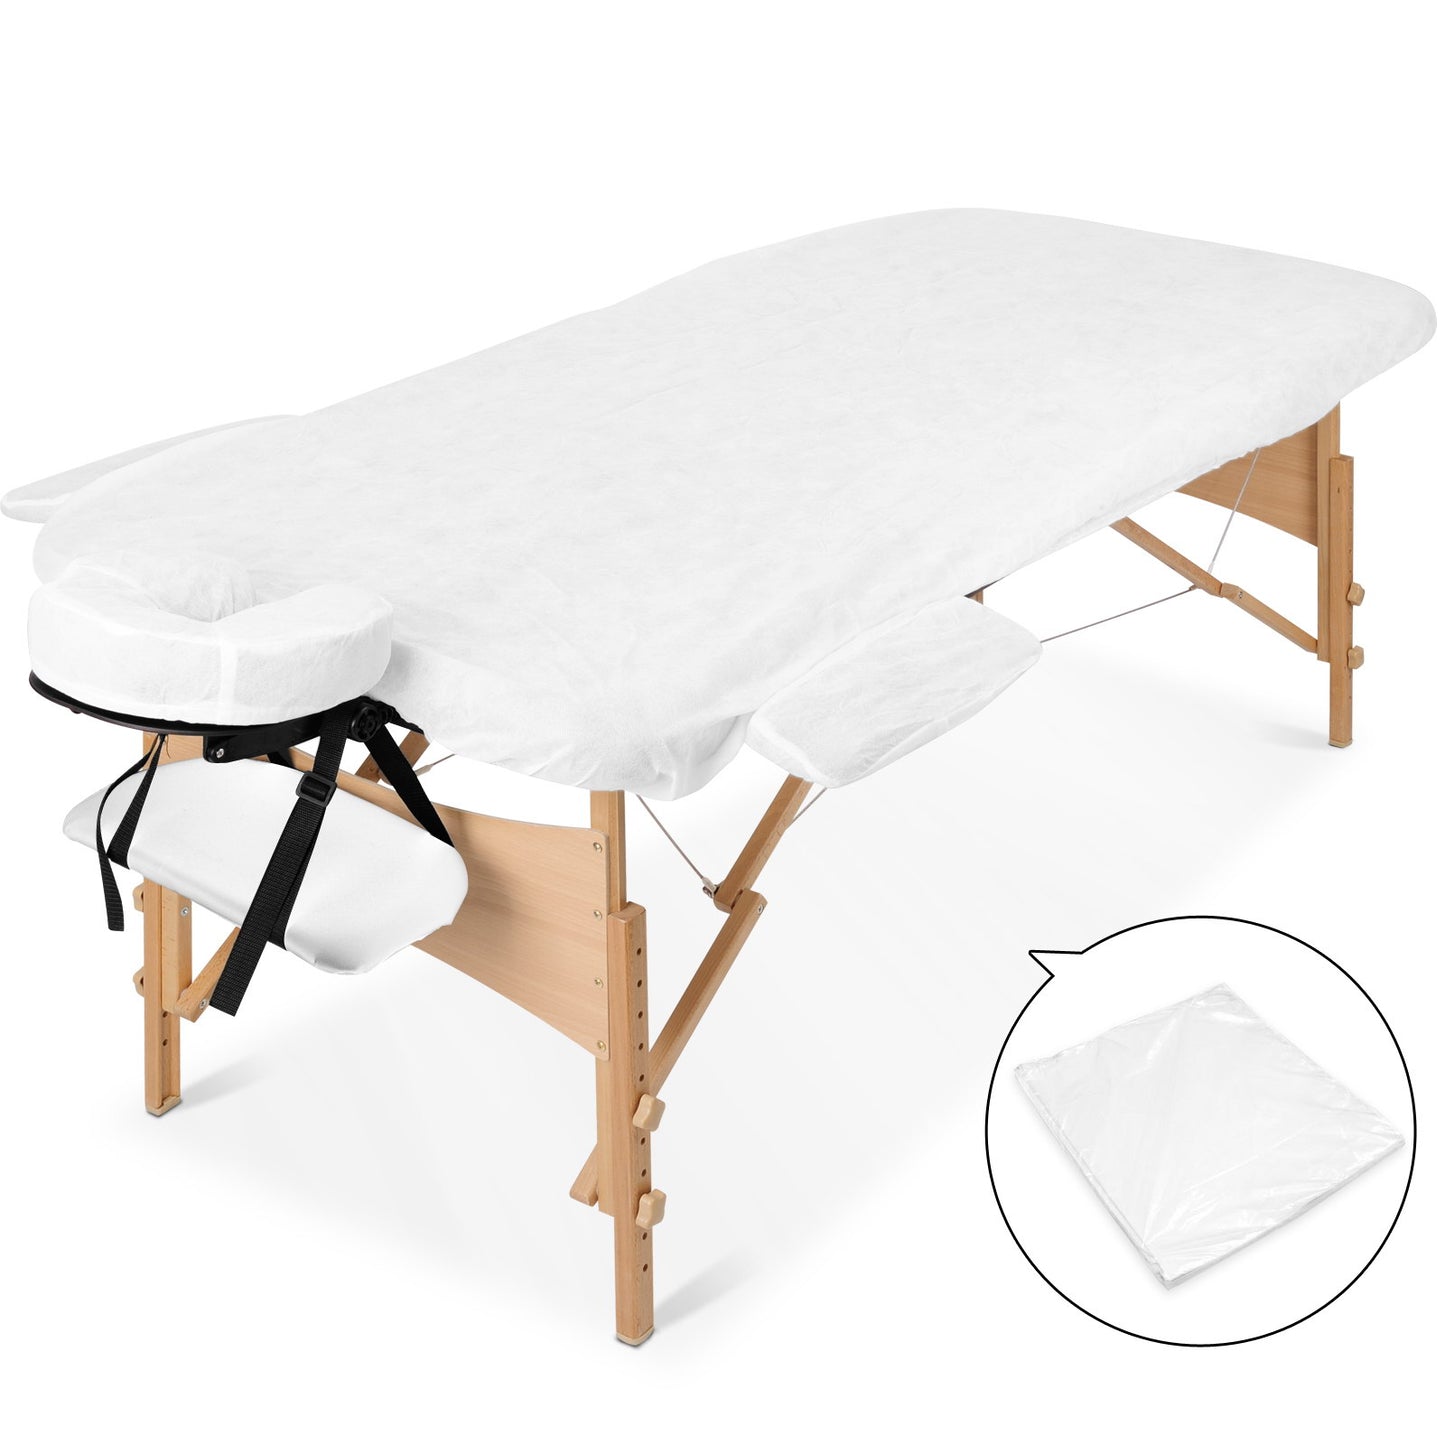 Zenses 3 Fold Portable Wood Massage Table - Black & Lime